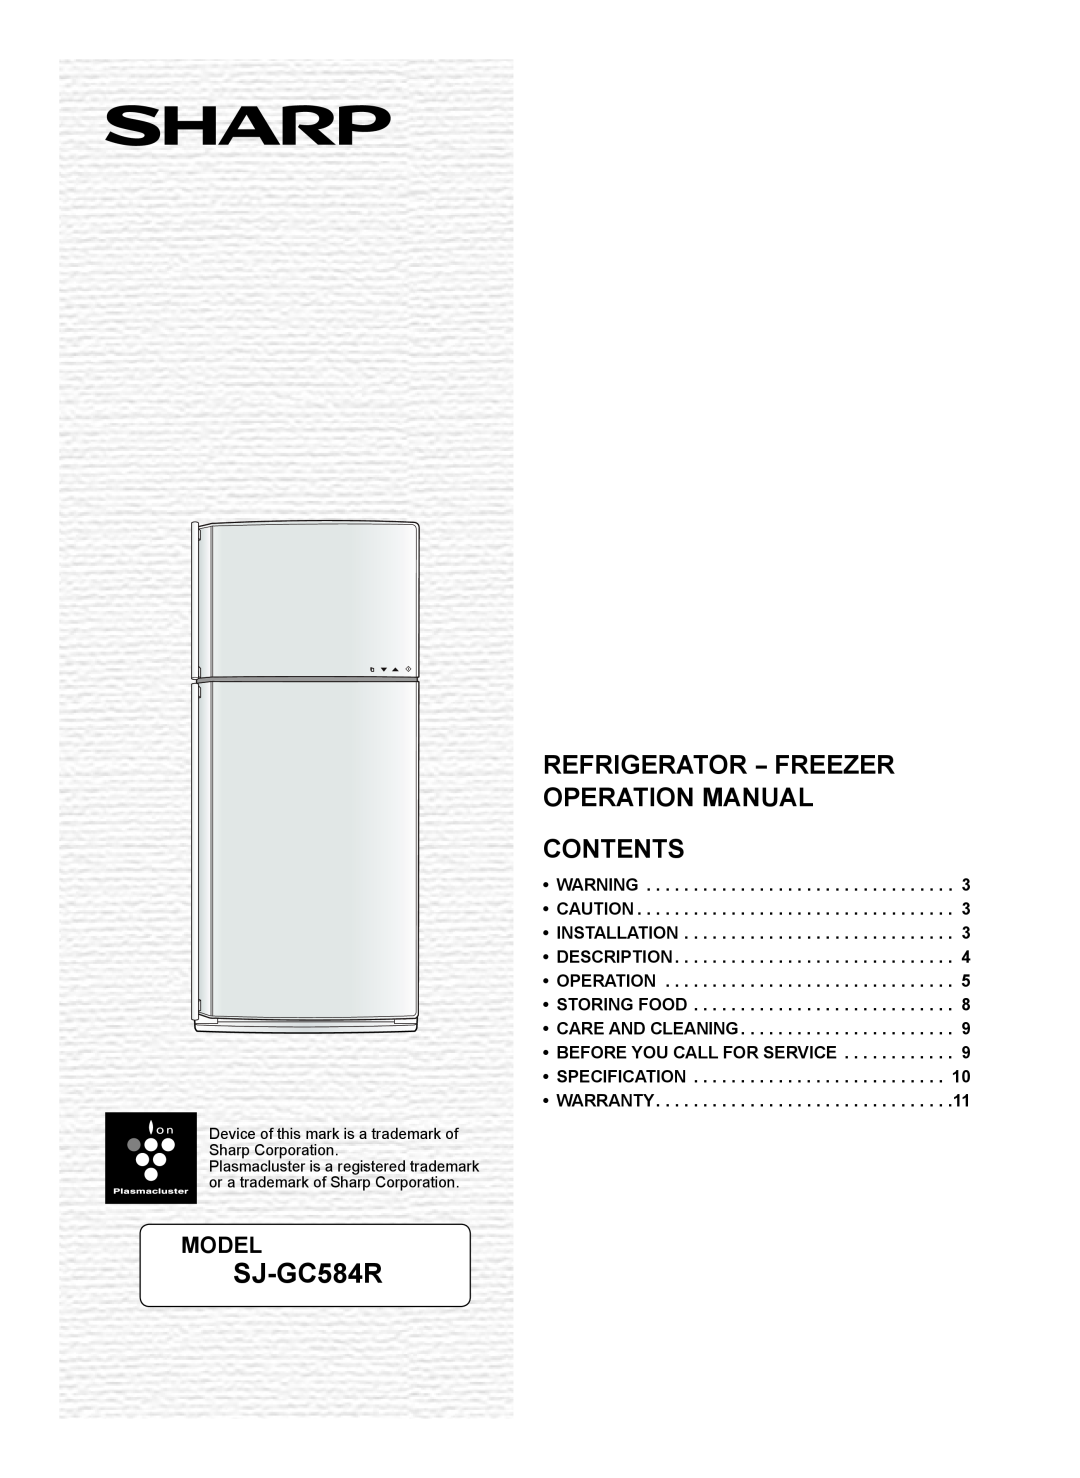 Sharp SJ-GC584R operation manual Refrigerator - Freezer, Operation Manual, Contents, Model, Installation, Storing Food 